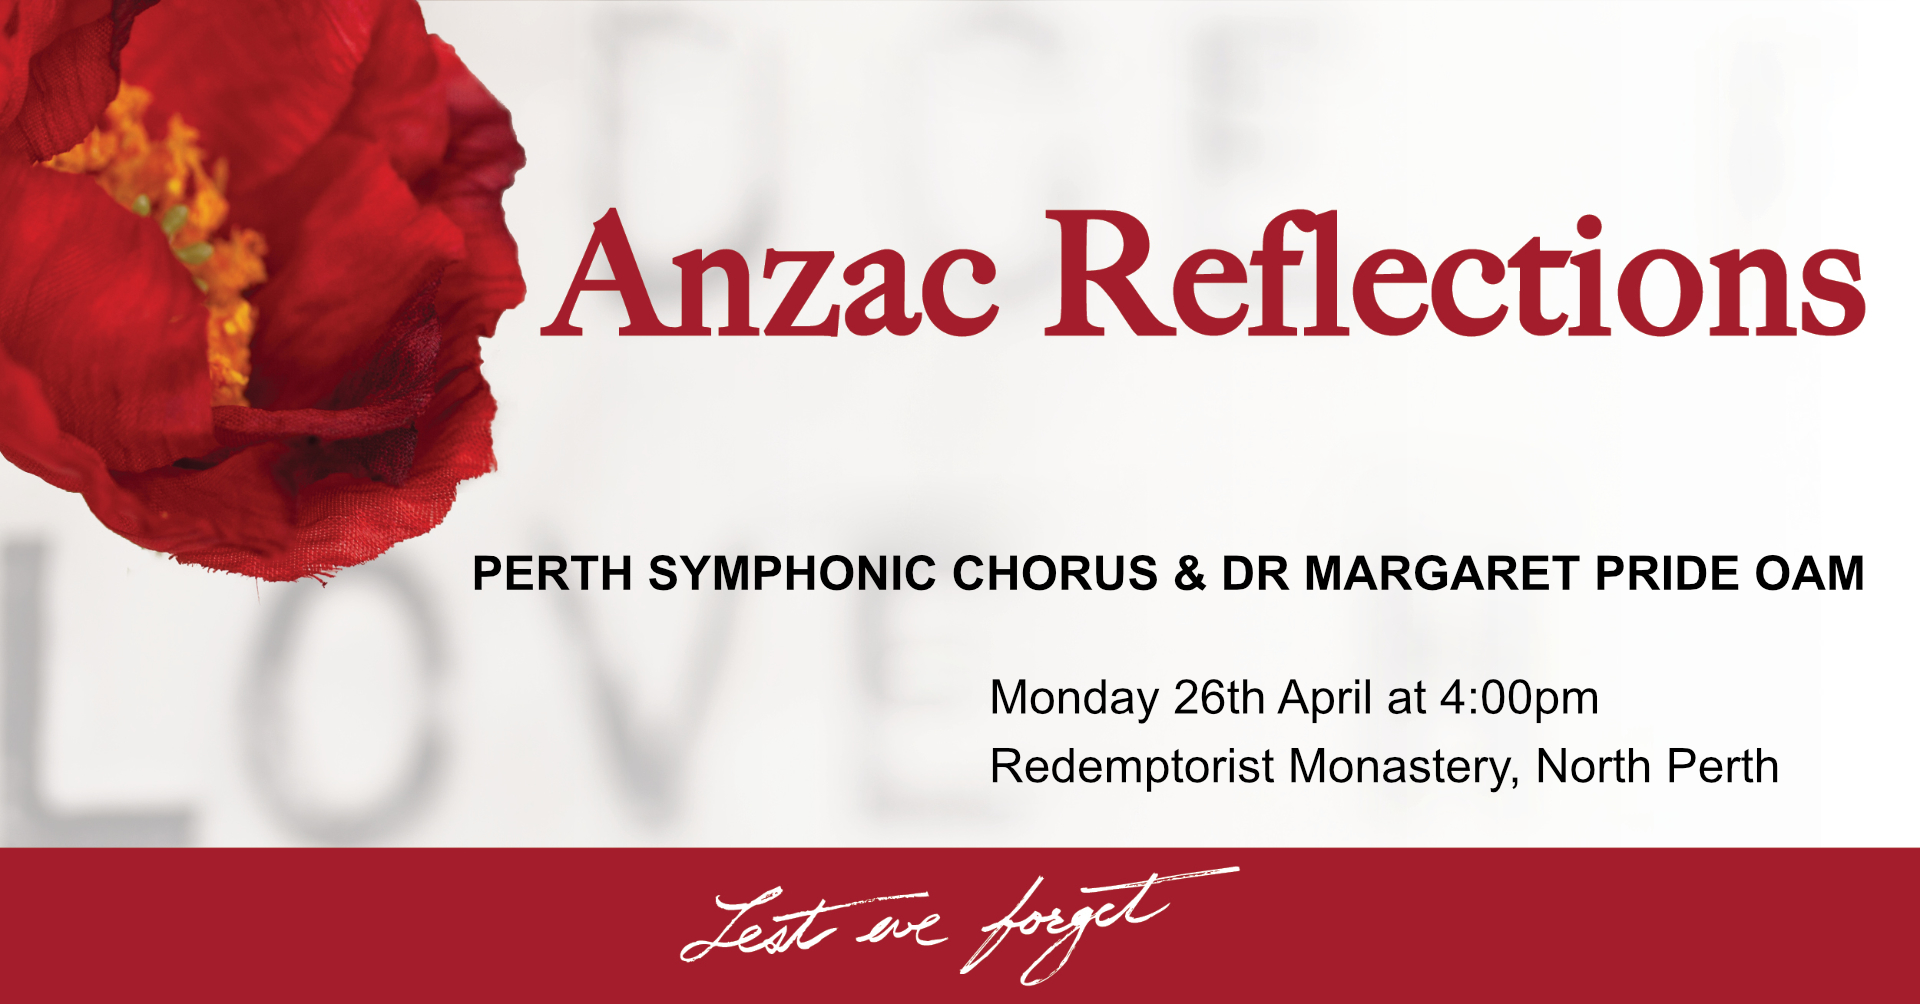 2021 Perth Symphonic Chorus concert